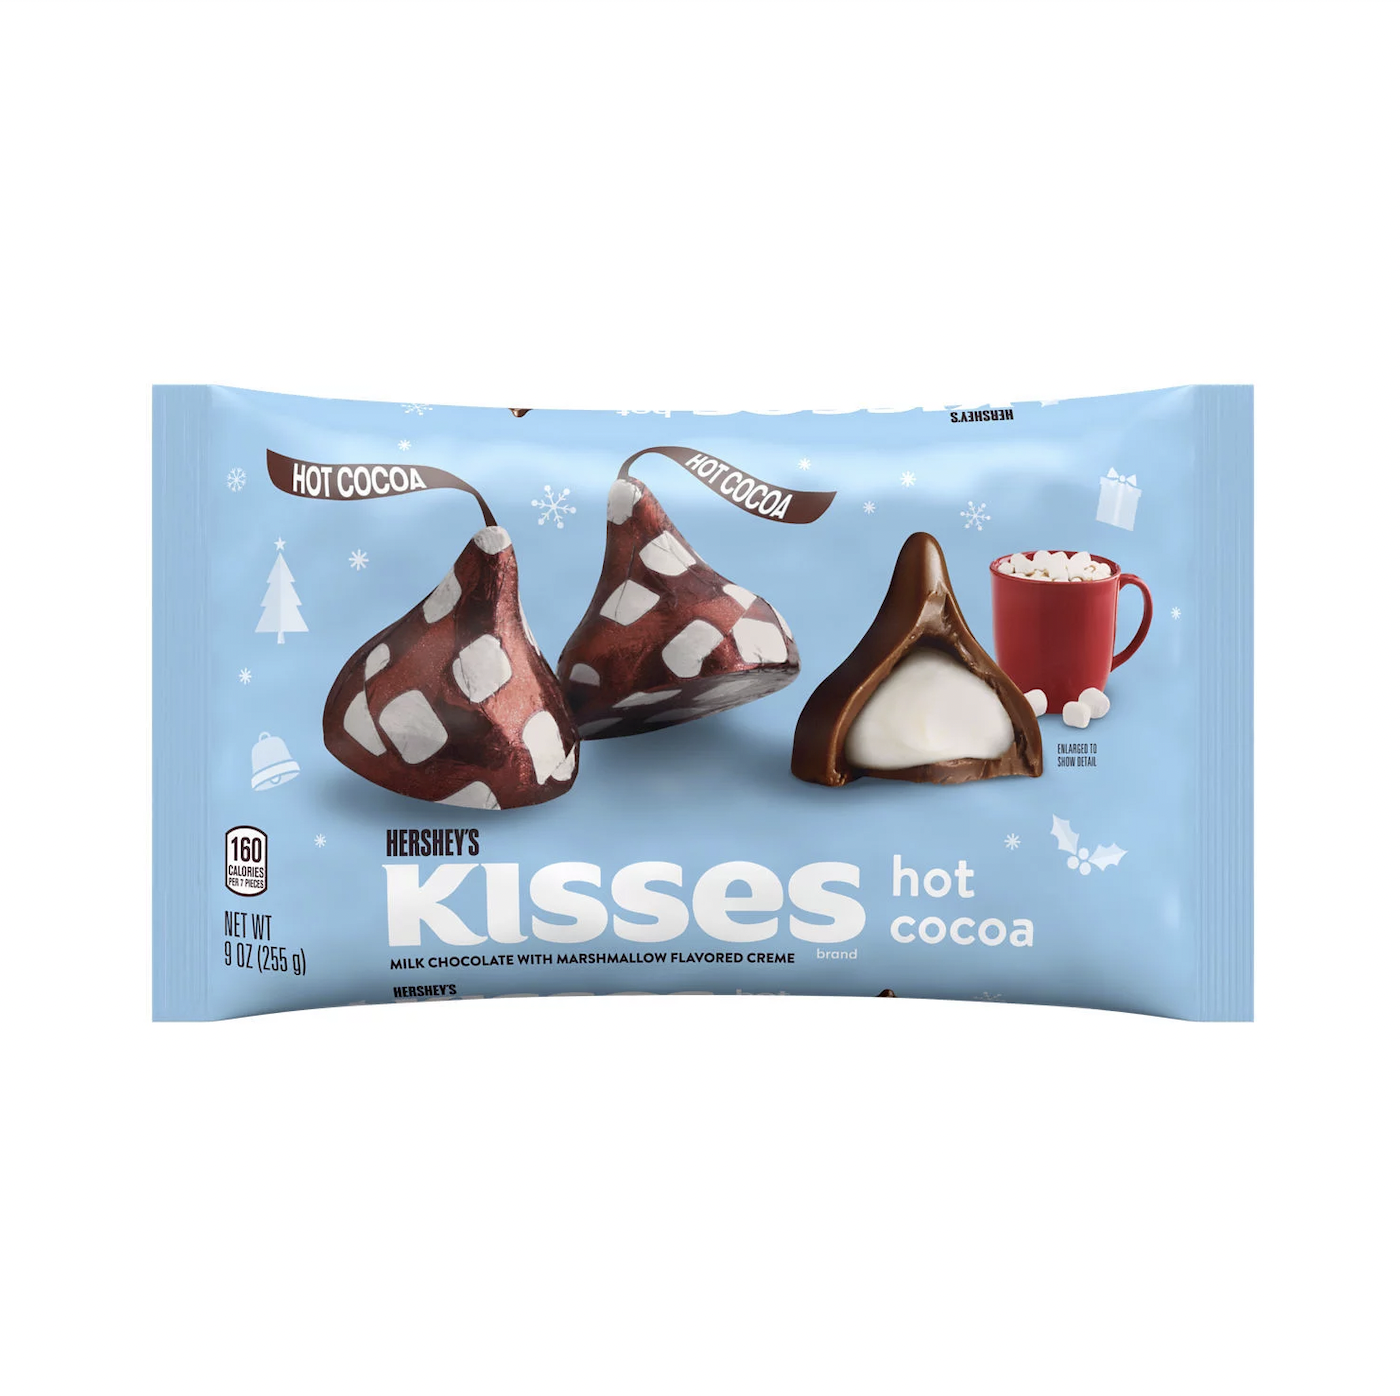 TÚI 255g SOCOLA SỮA MARSHMALLOW Her-shey's Kisses - Hot Cocoa Milk Chocolate, Christmas - MẪU GIÁNG SINH (9oz)